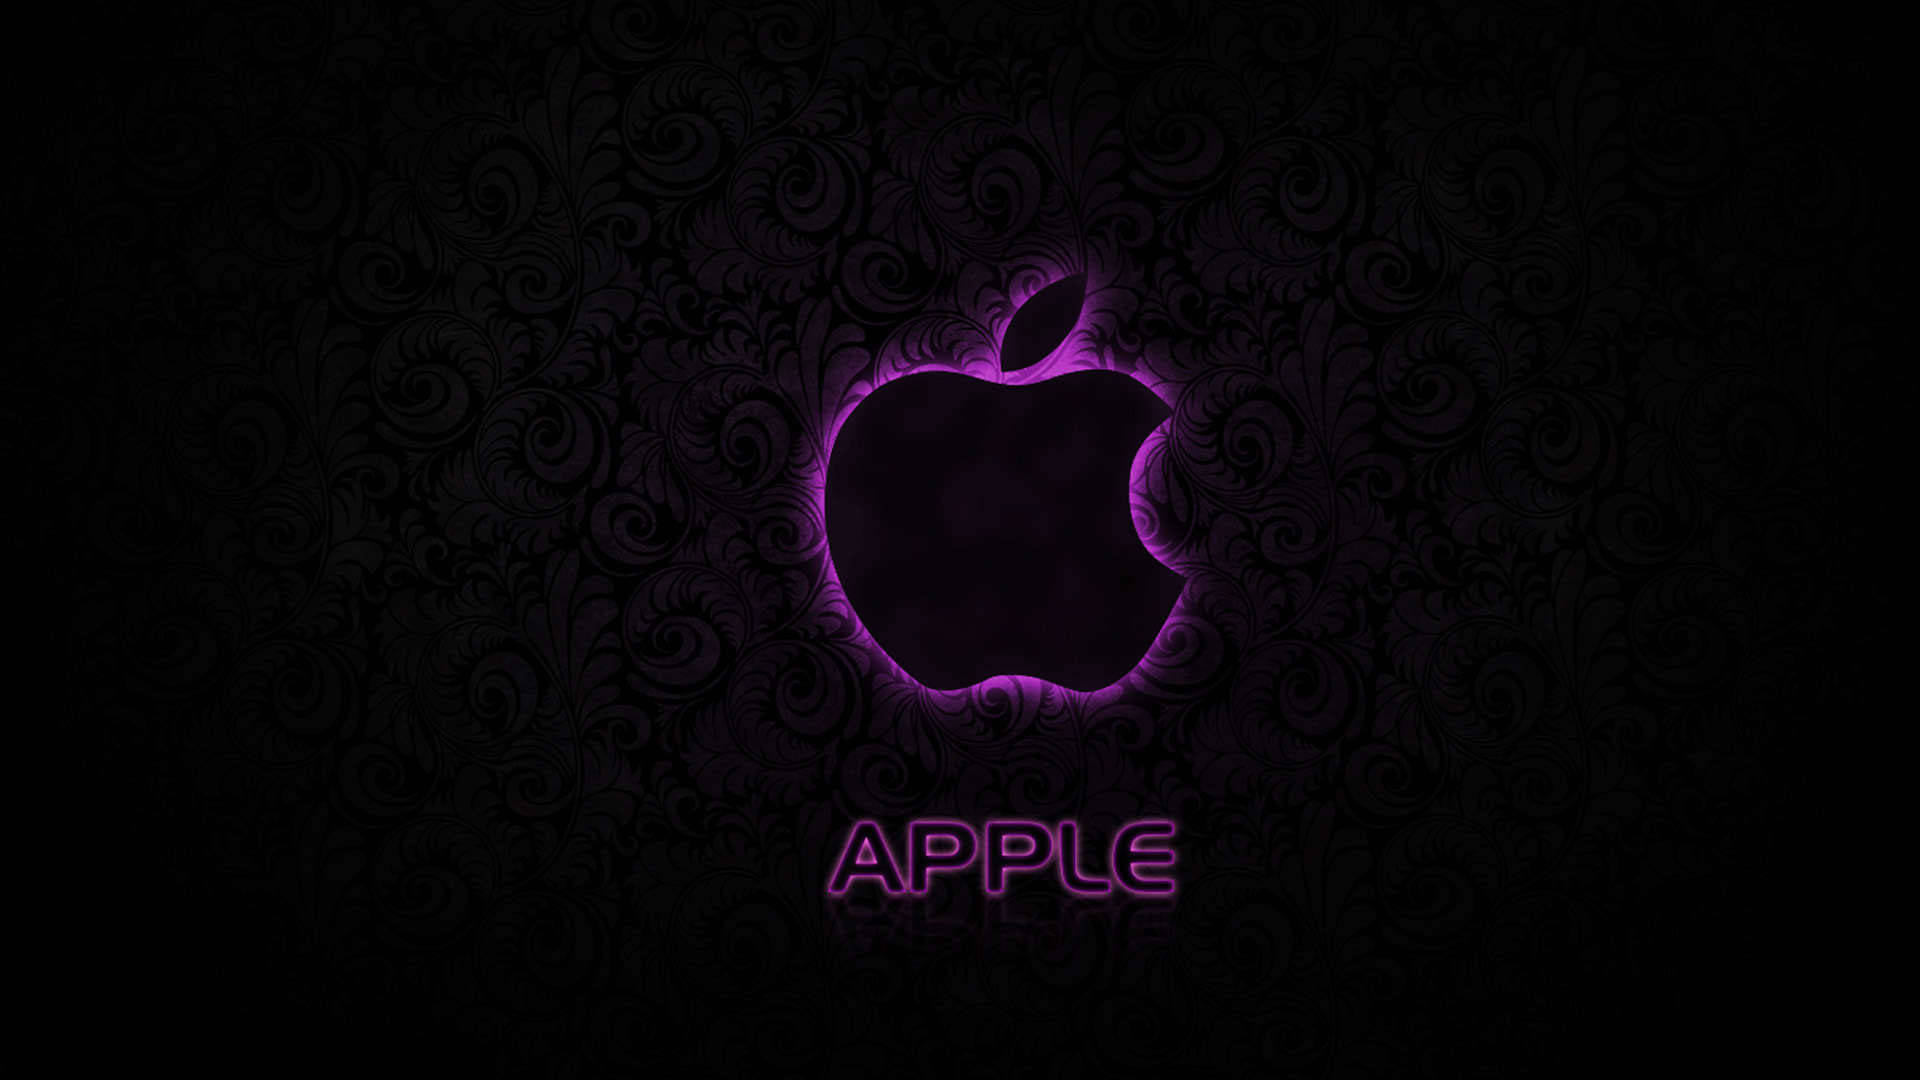 Textured Black And Purple Aesthetic Apple Wallpaper